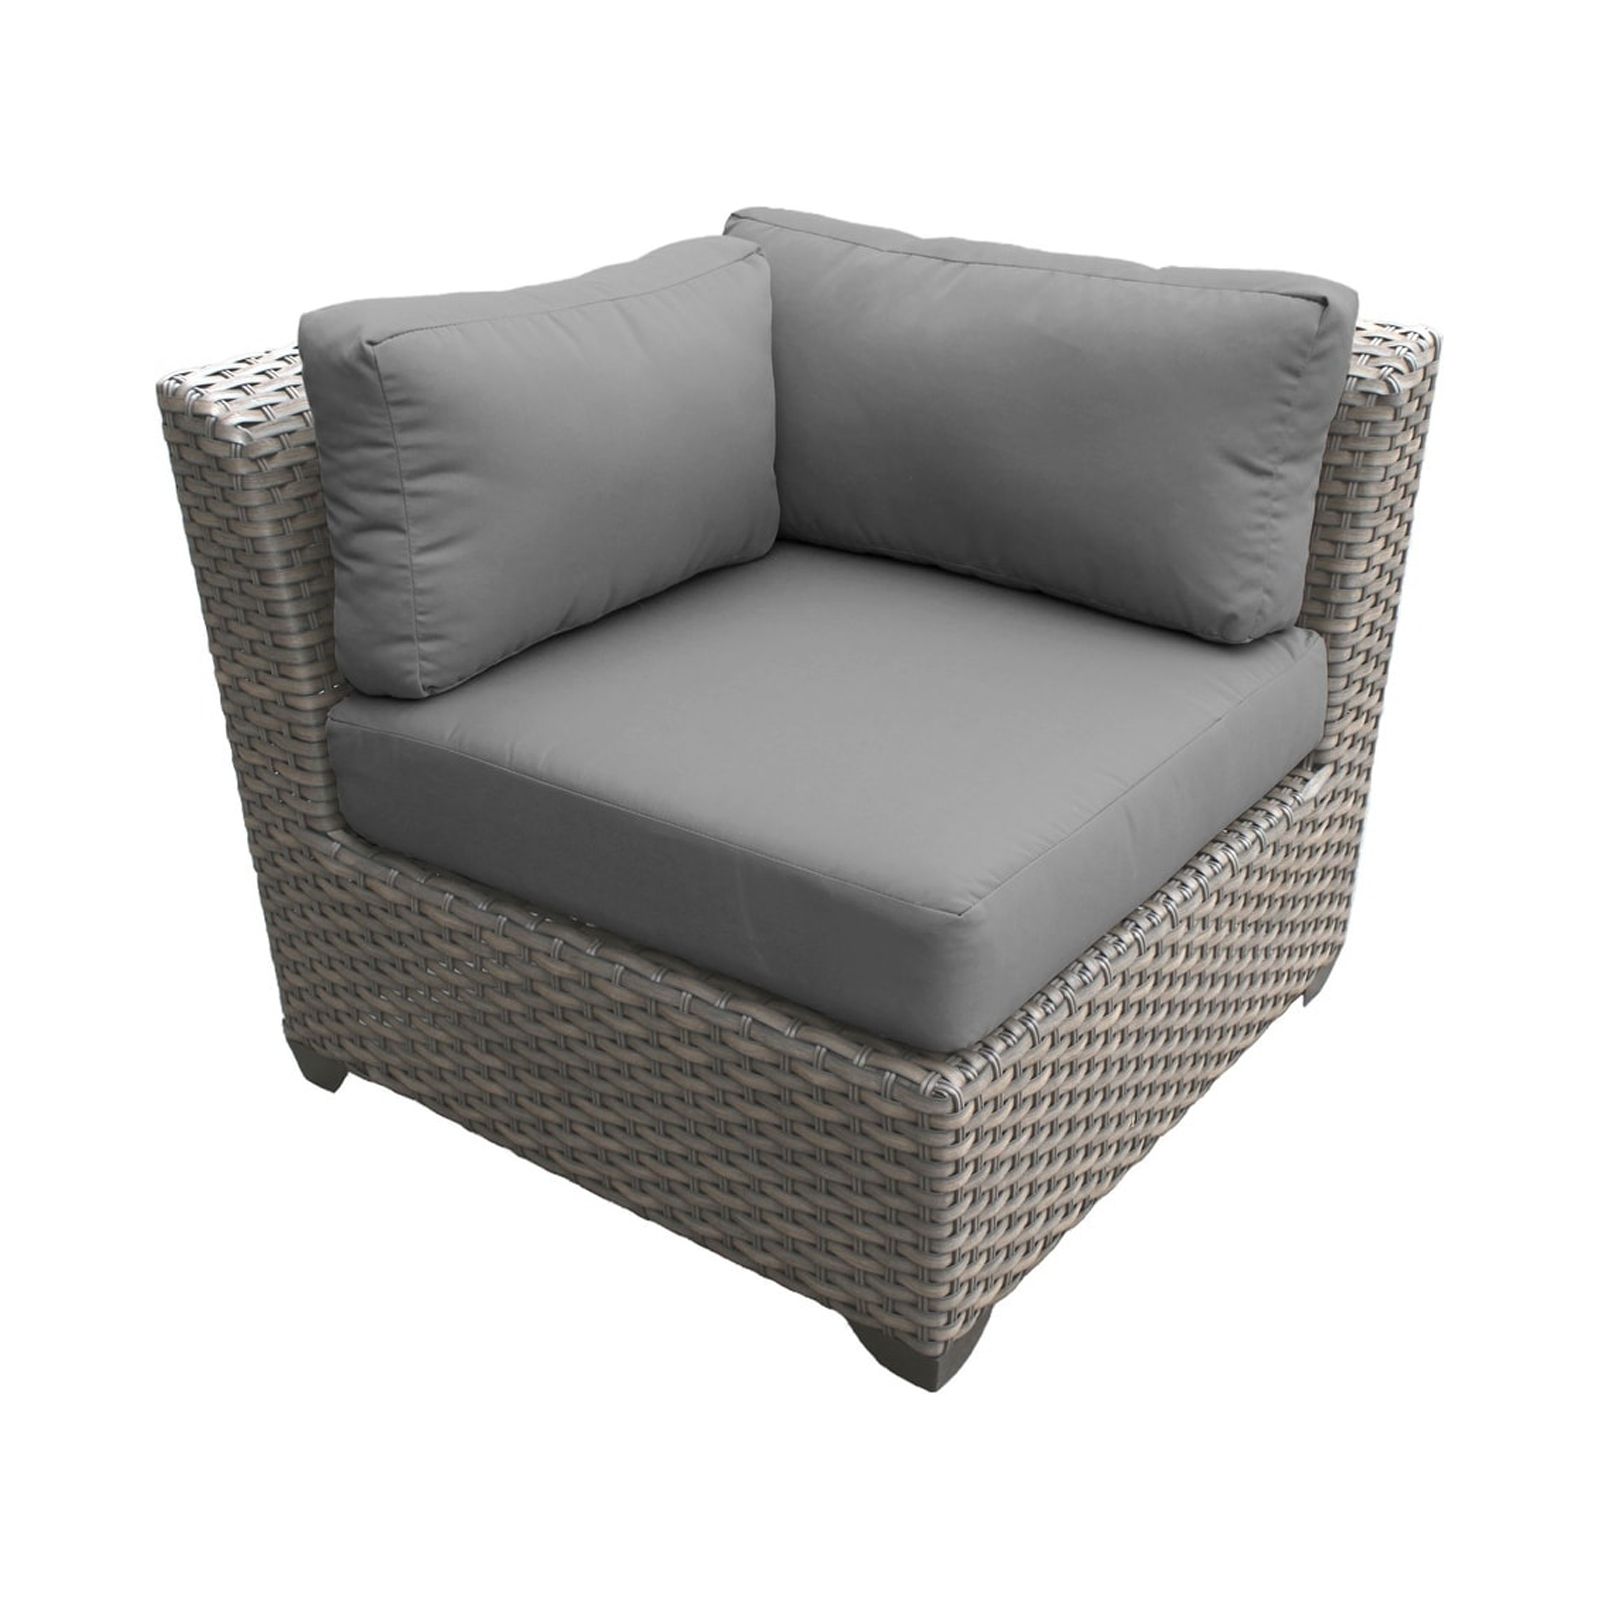 TK Classics Florence 6-Piece Wicker Patio Sofa Set in Gray - image 4 of 5